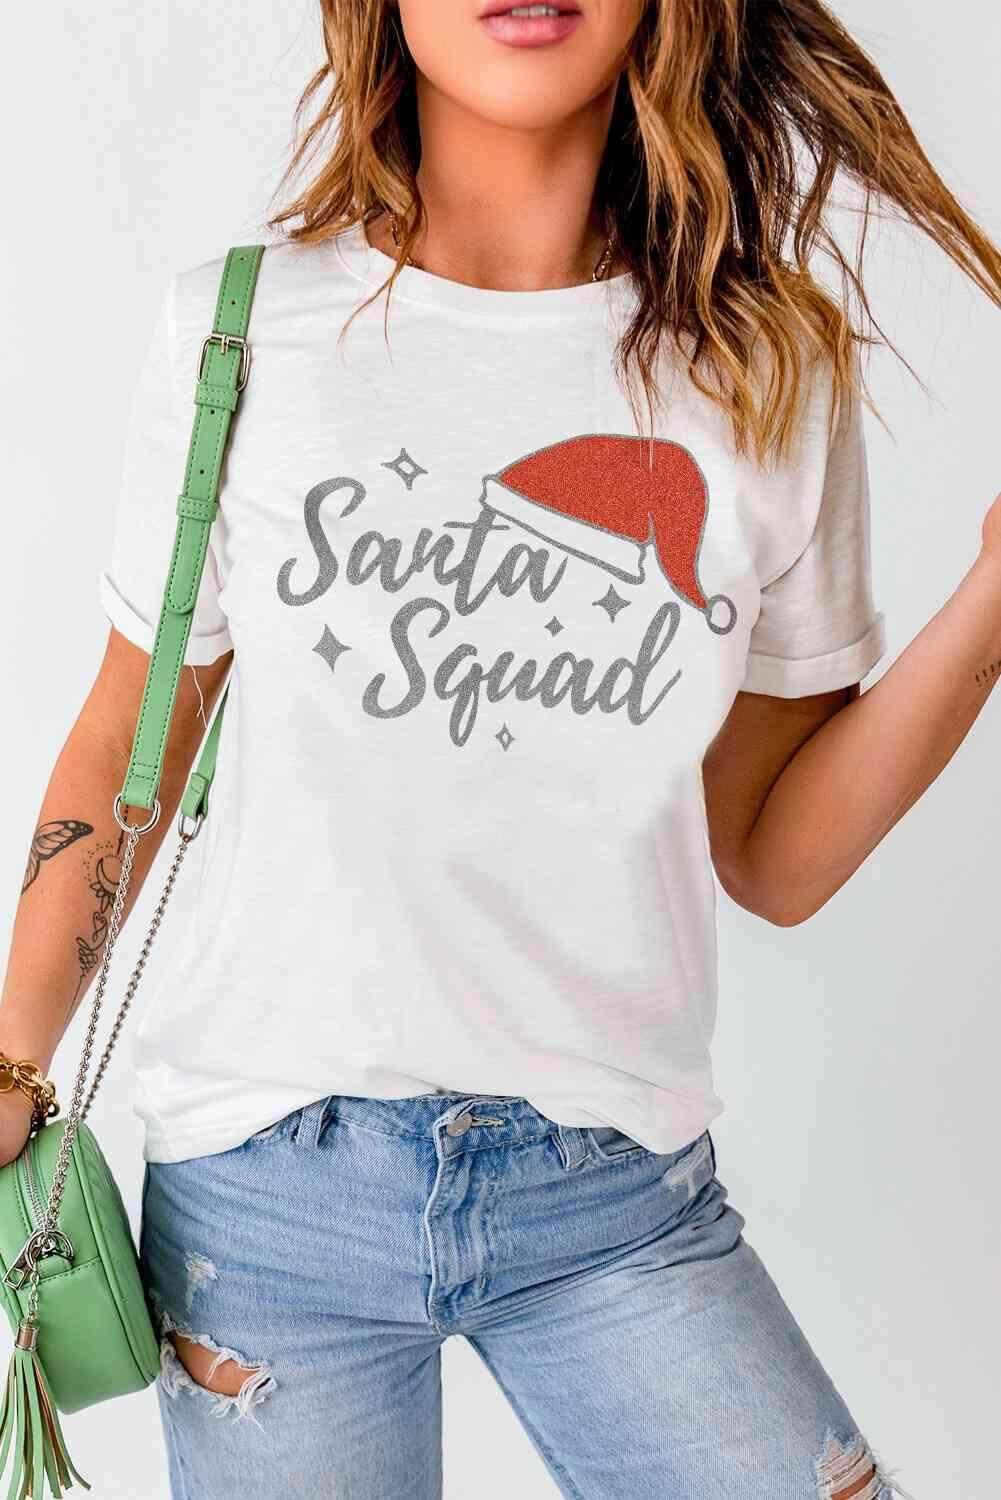 SANTA SQUAD Graphic Short Sleeve T-Shirt - Trendociti